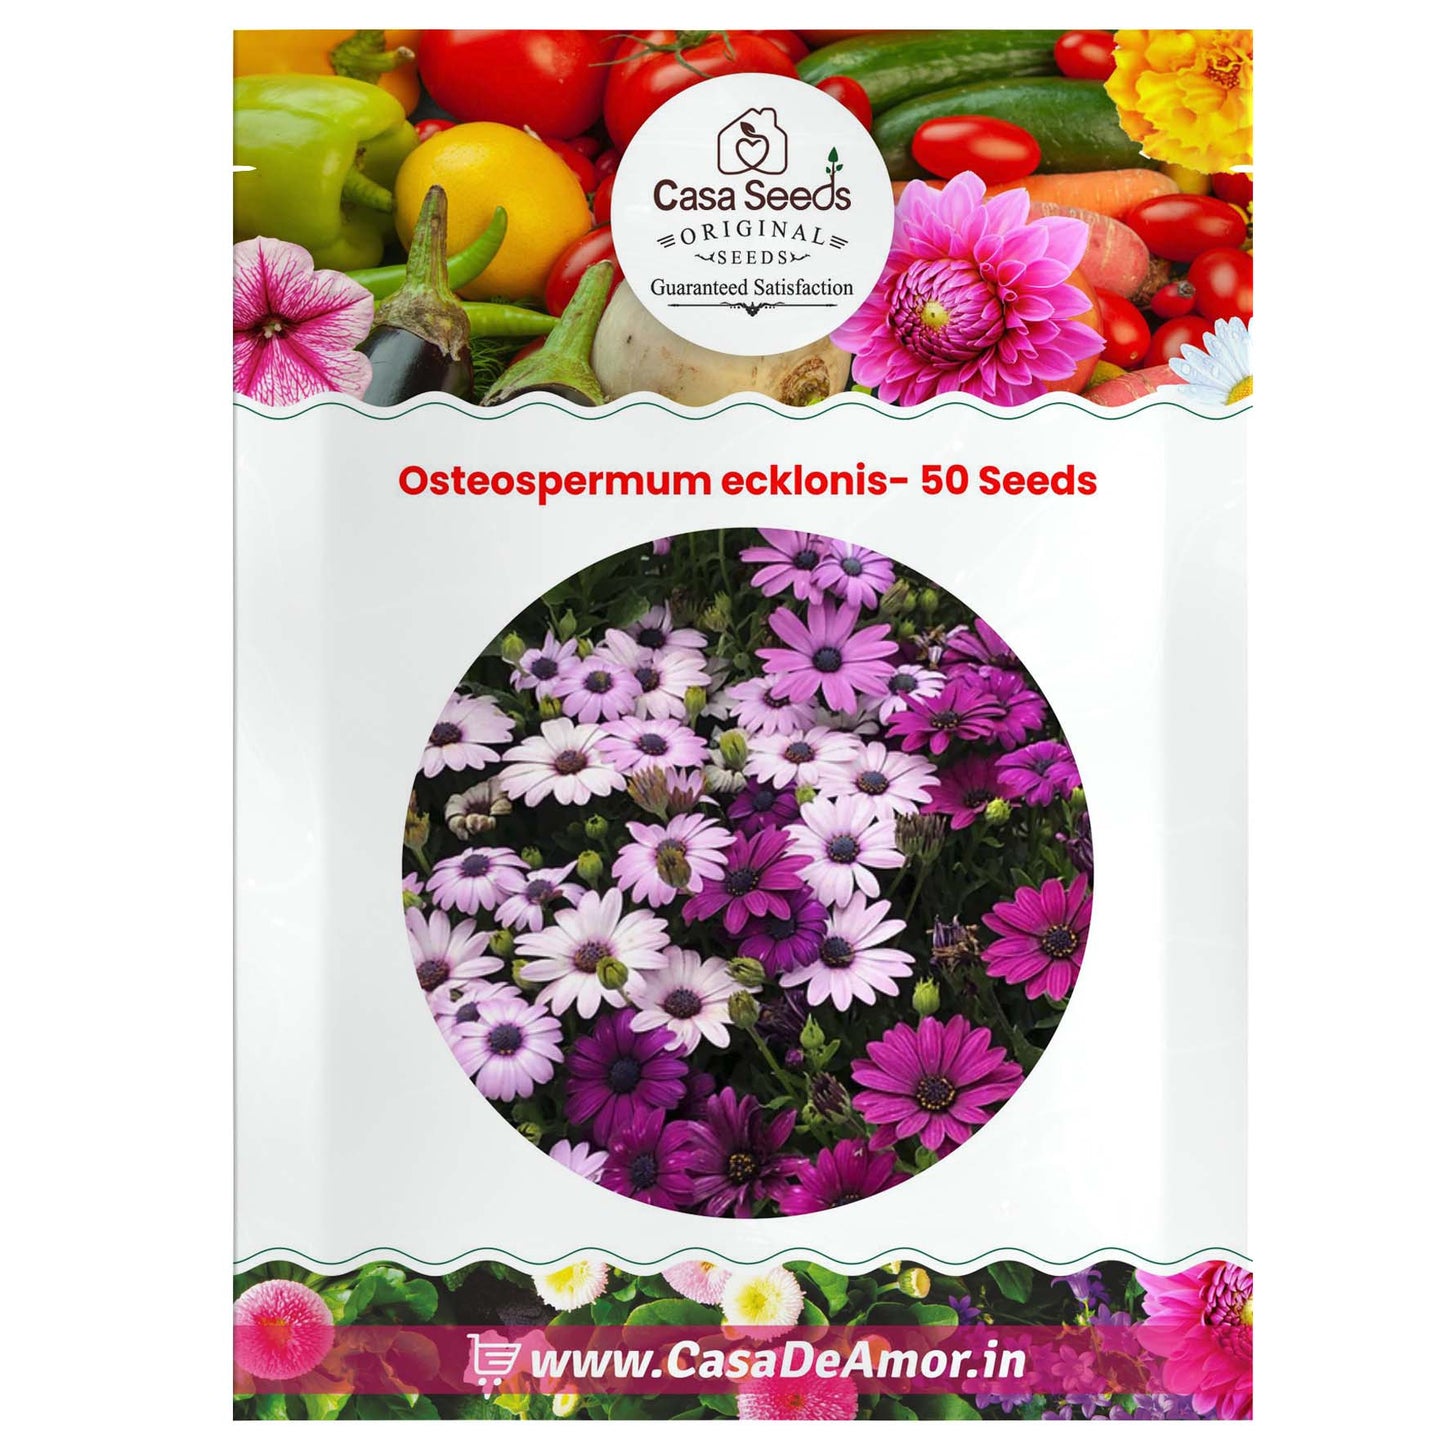 Osteospermum ecklonis- 50 Seeds